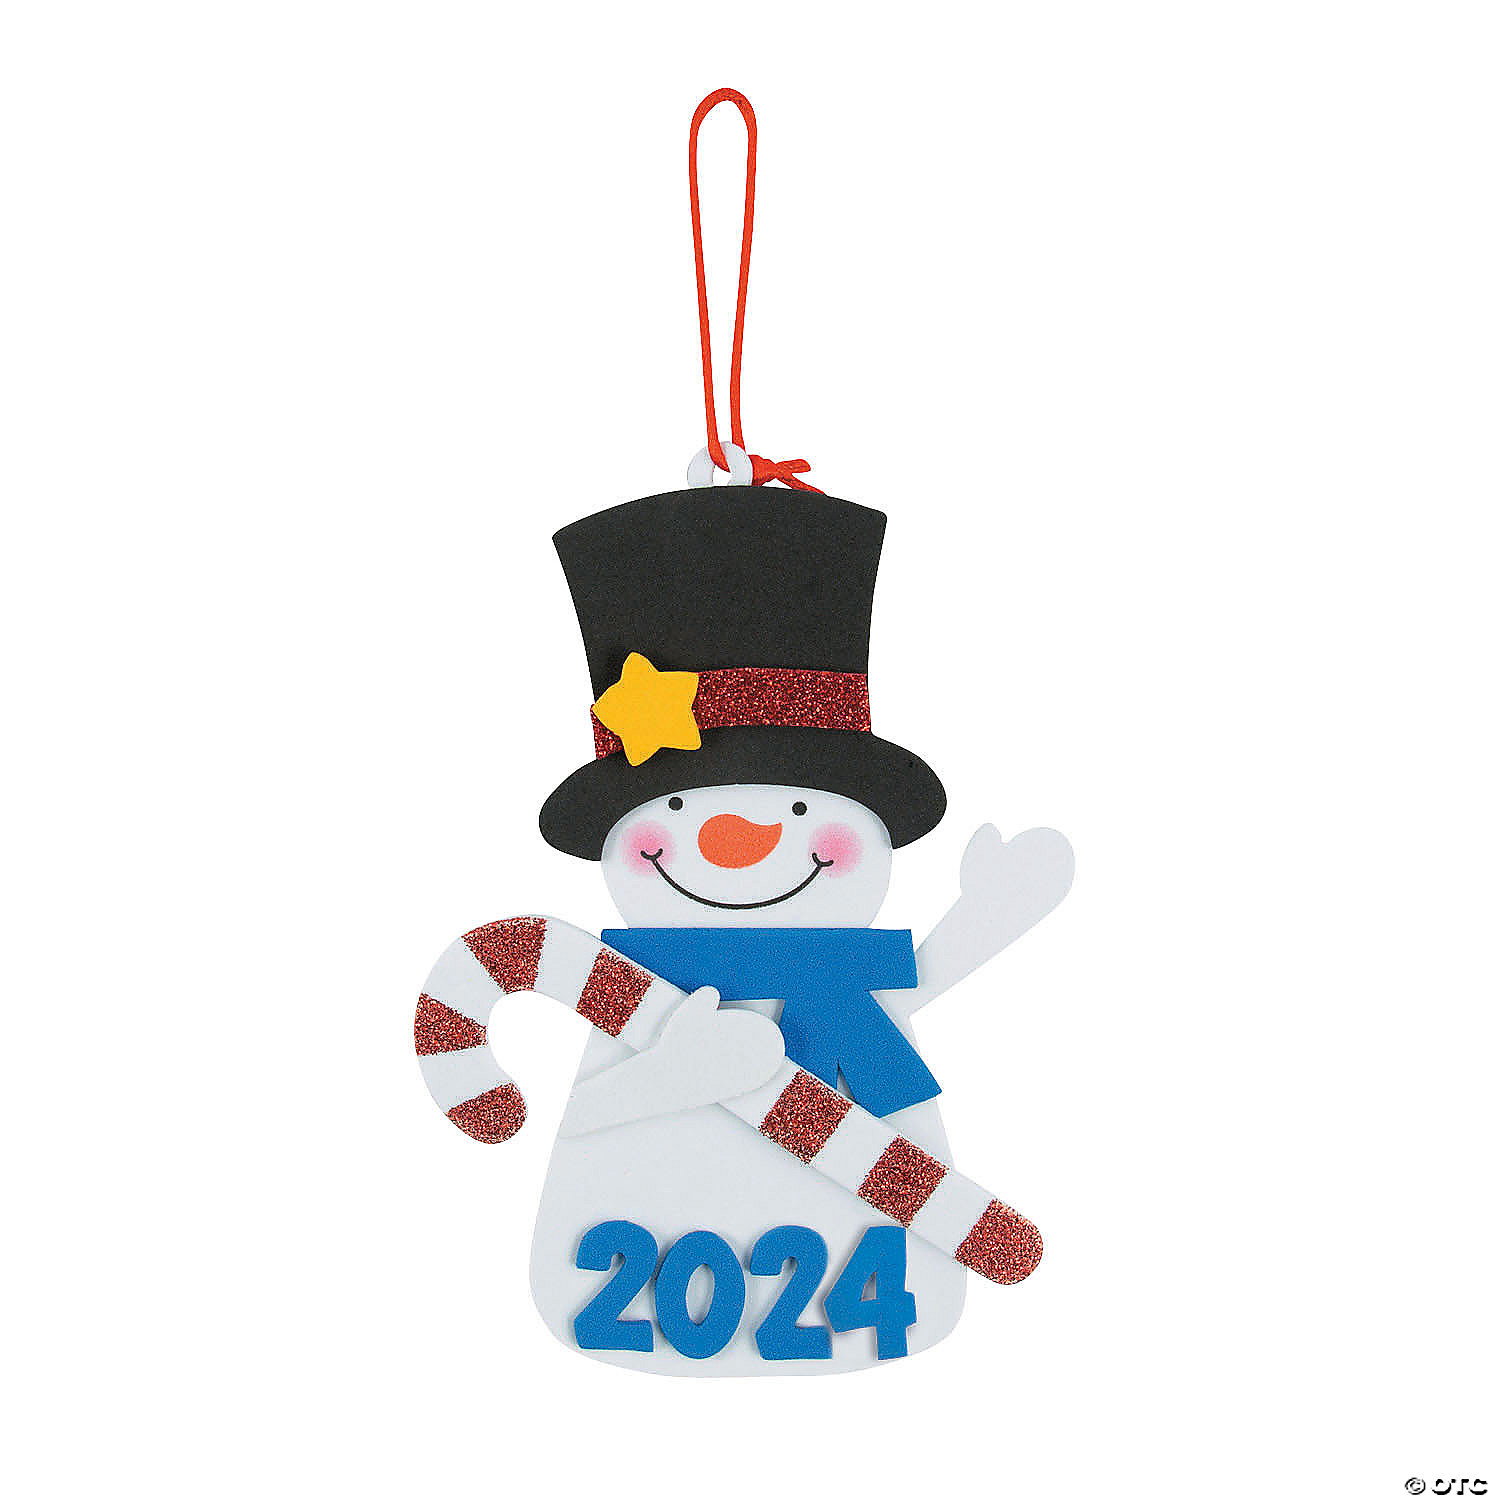 Herrnalise Snowman Decorating Kit,16Pcs Christmas Snowman Making